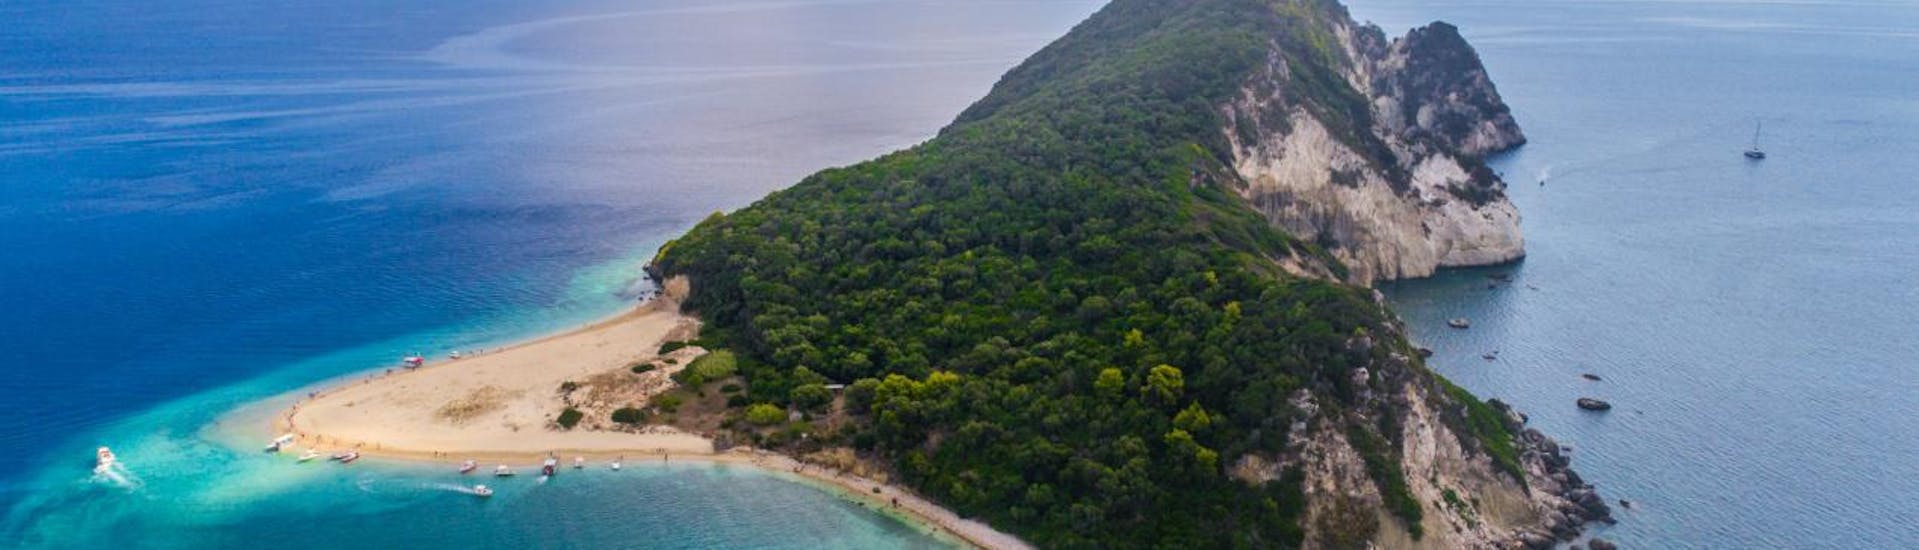 Location de bateau à Agios Sostis (jusqu'à 6 pers.) - Laganas Bay, Marathonisi (Turtle Island) & Keri Caves.